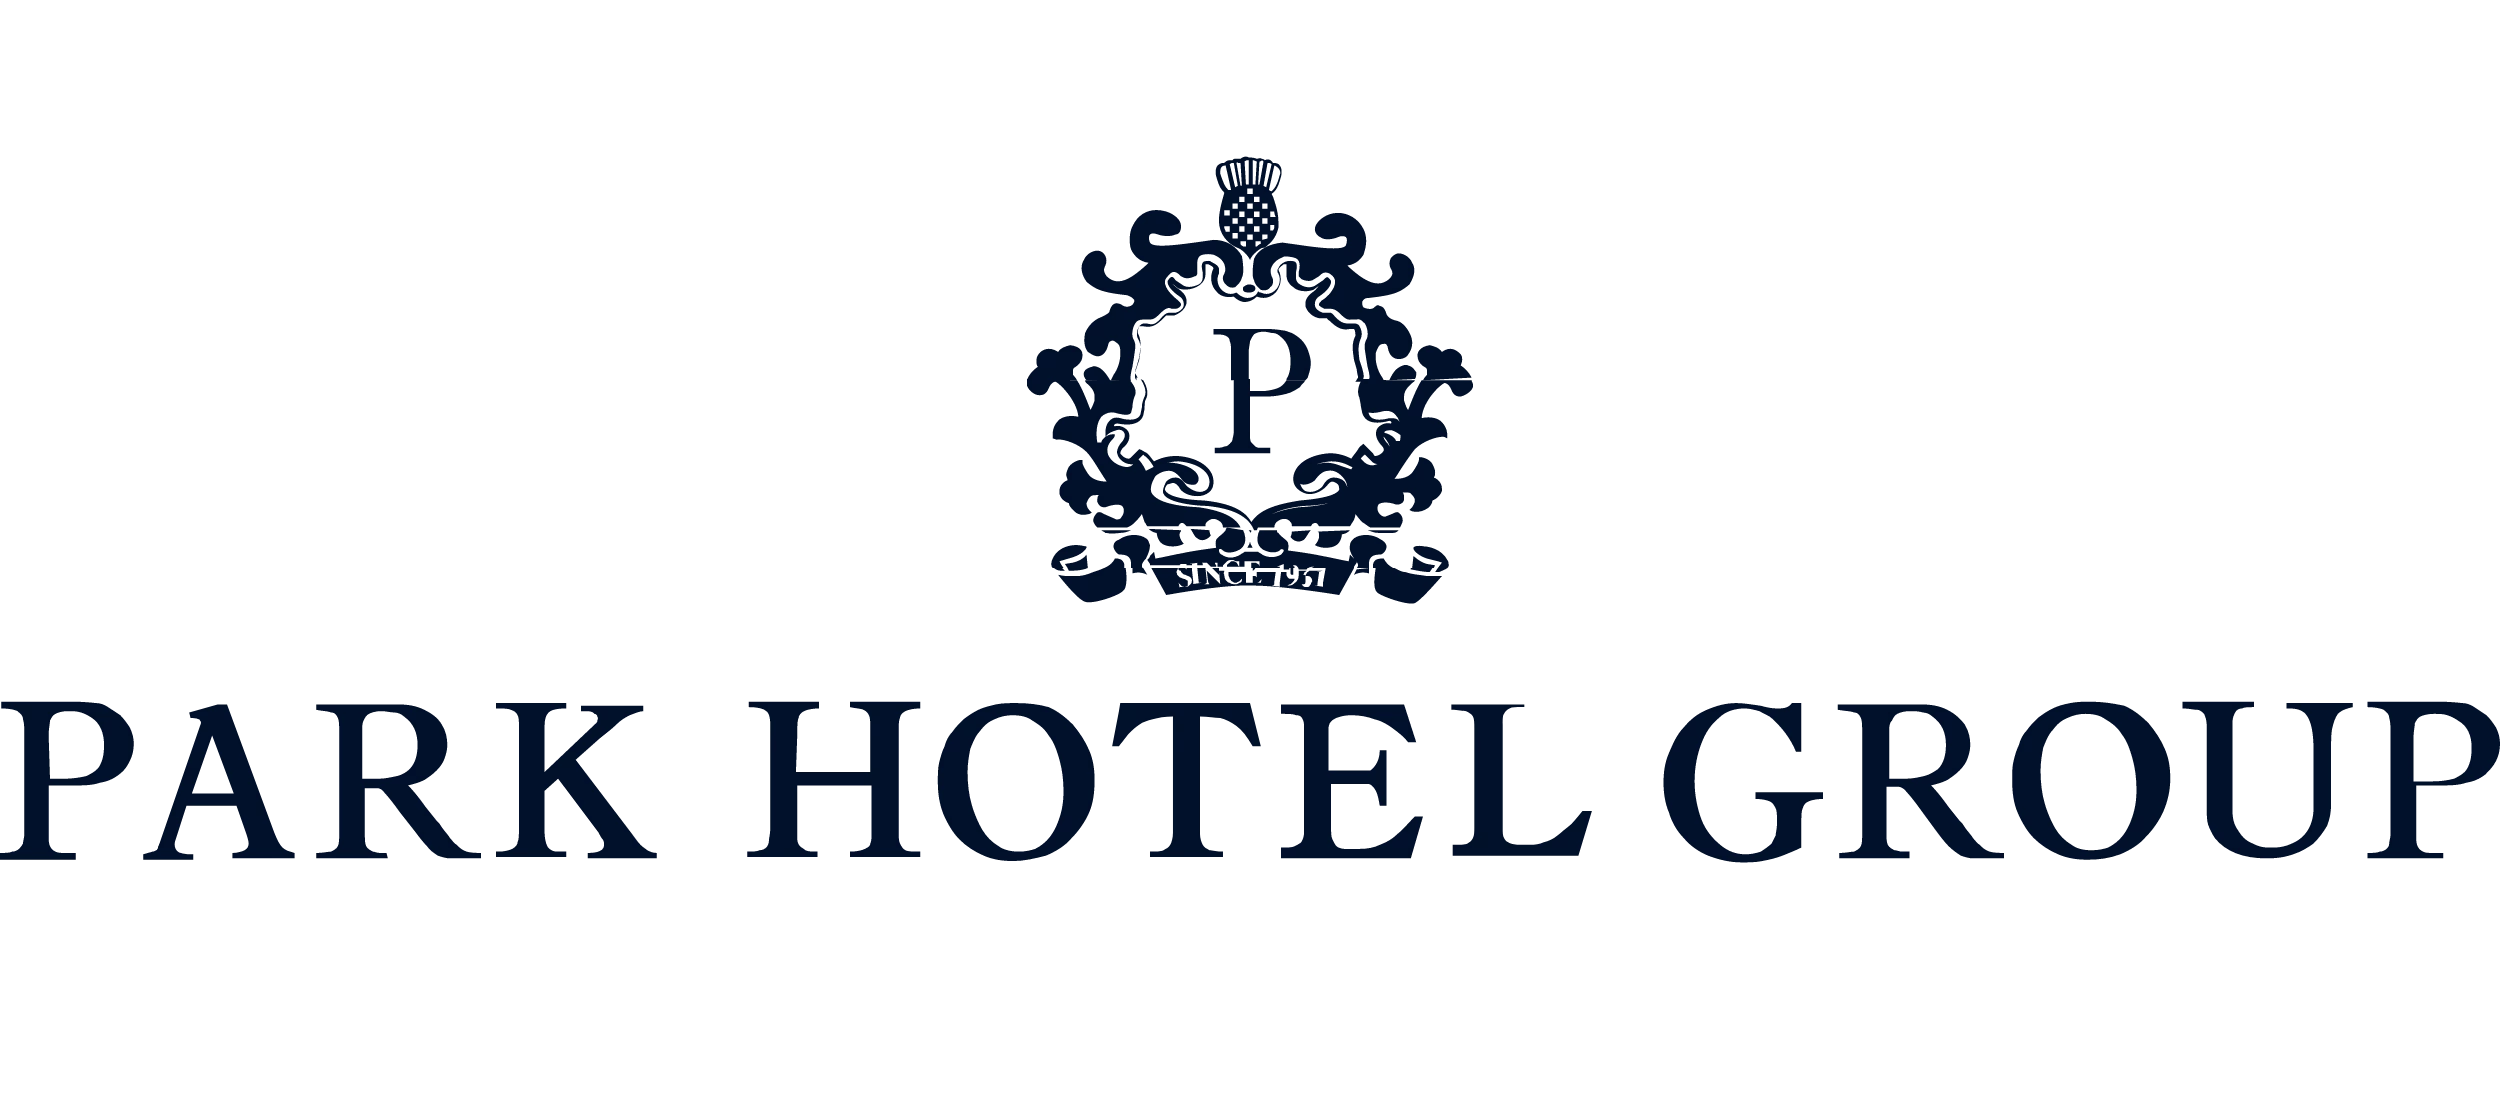 Park Hotel Group logo